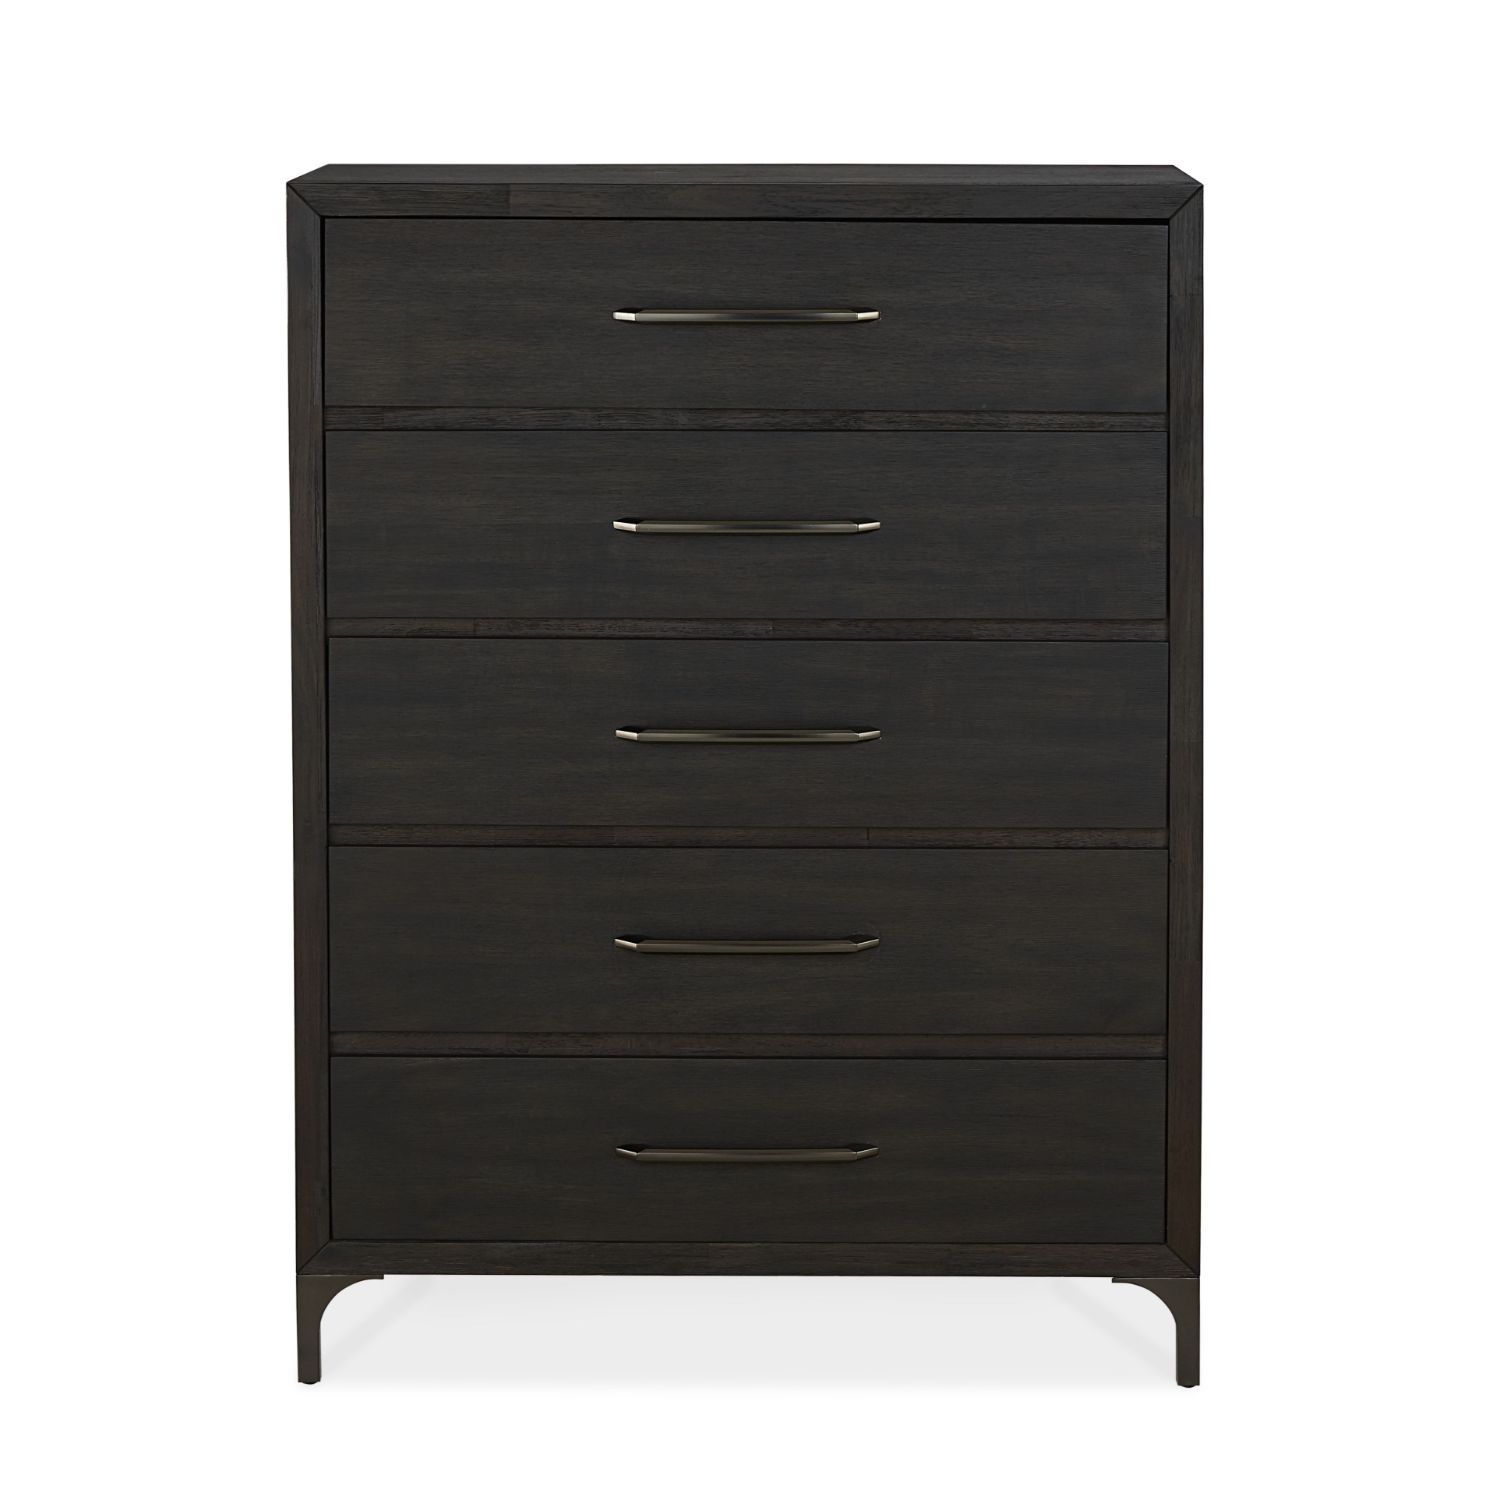 Modus Hearst 9 Drawer Solid Wood Dresser in Sahara Tan - image 4 of 5